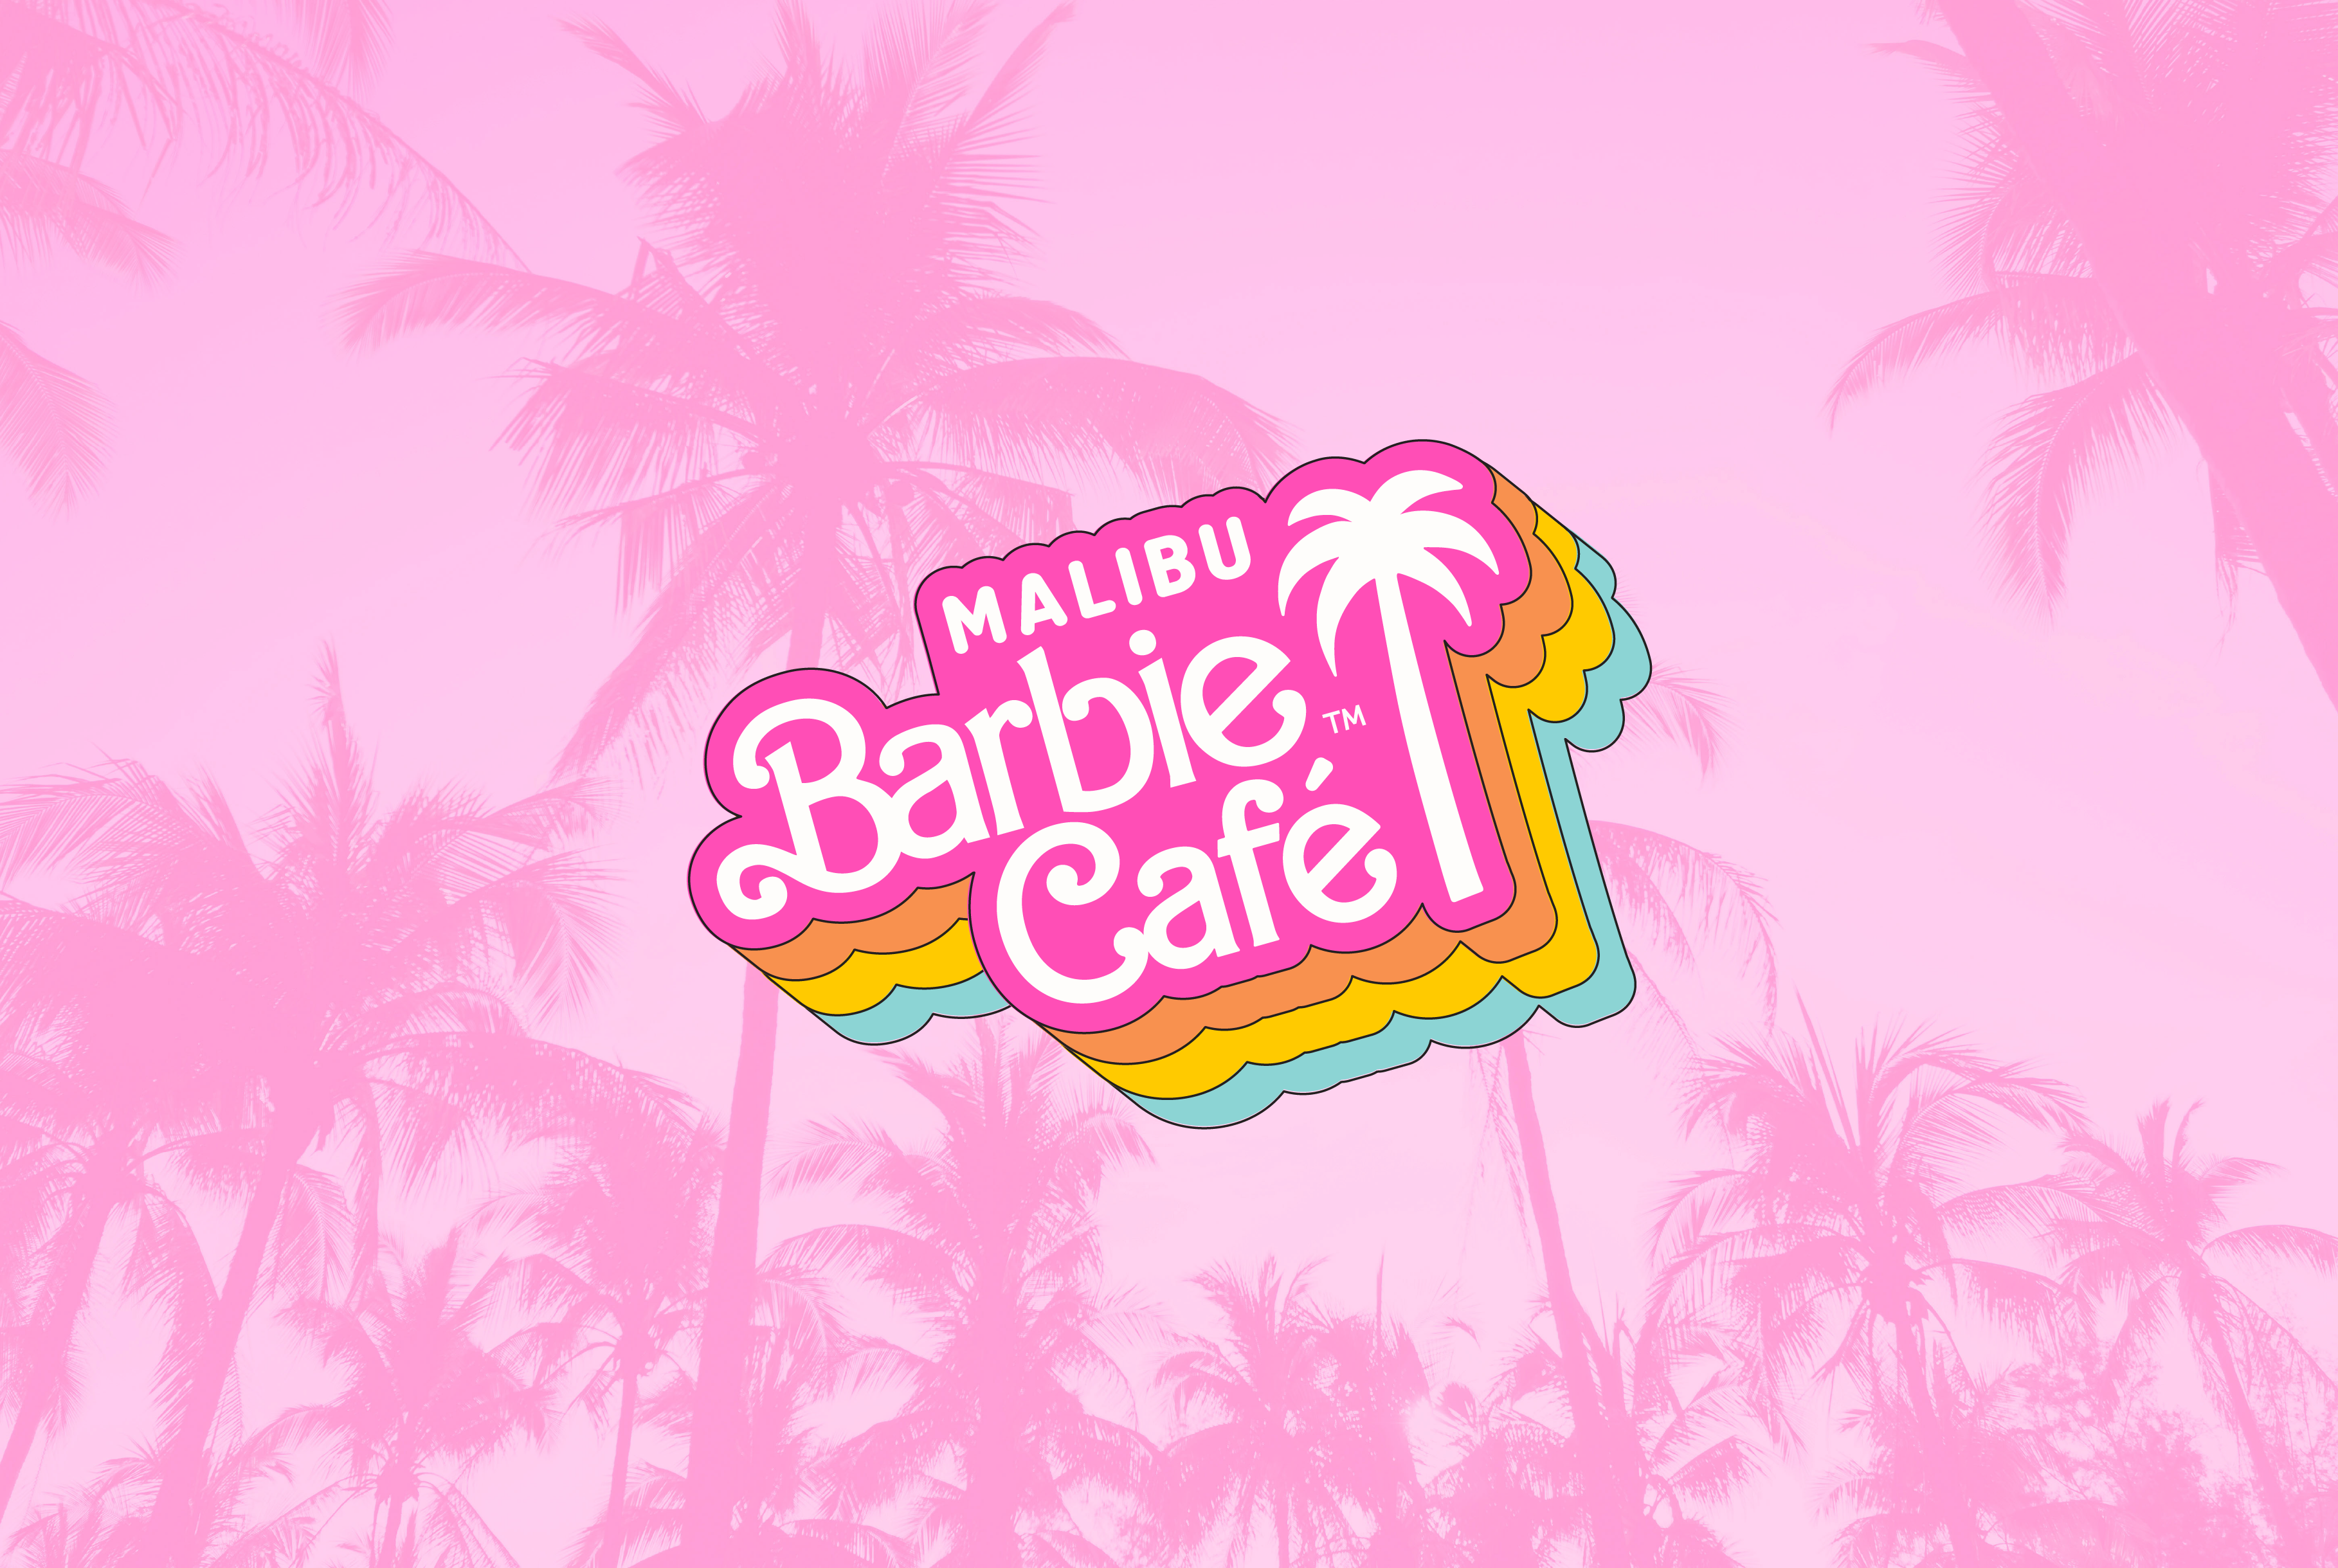 Malibu Barbie Cafe logo